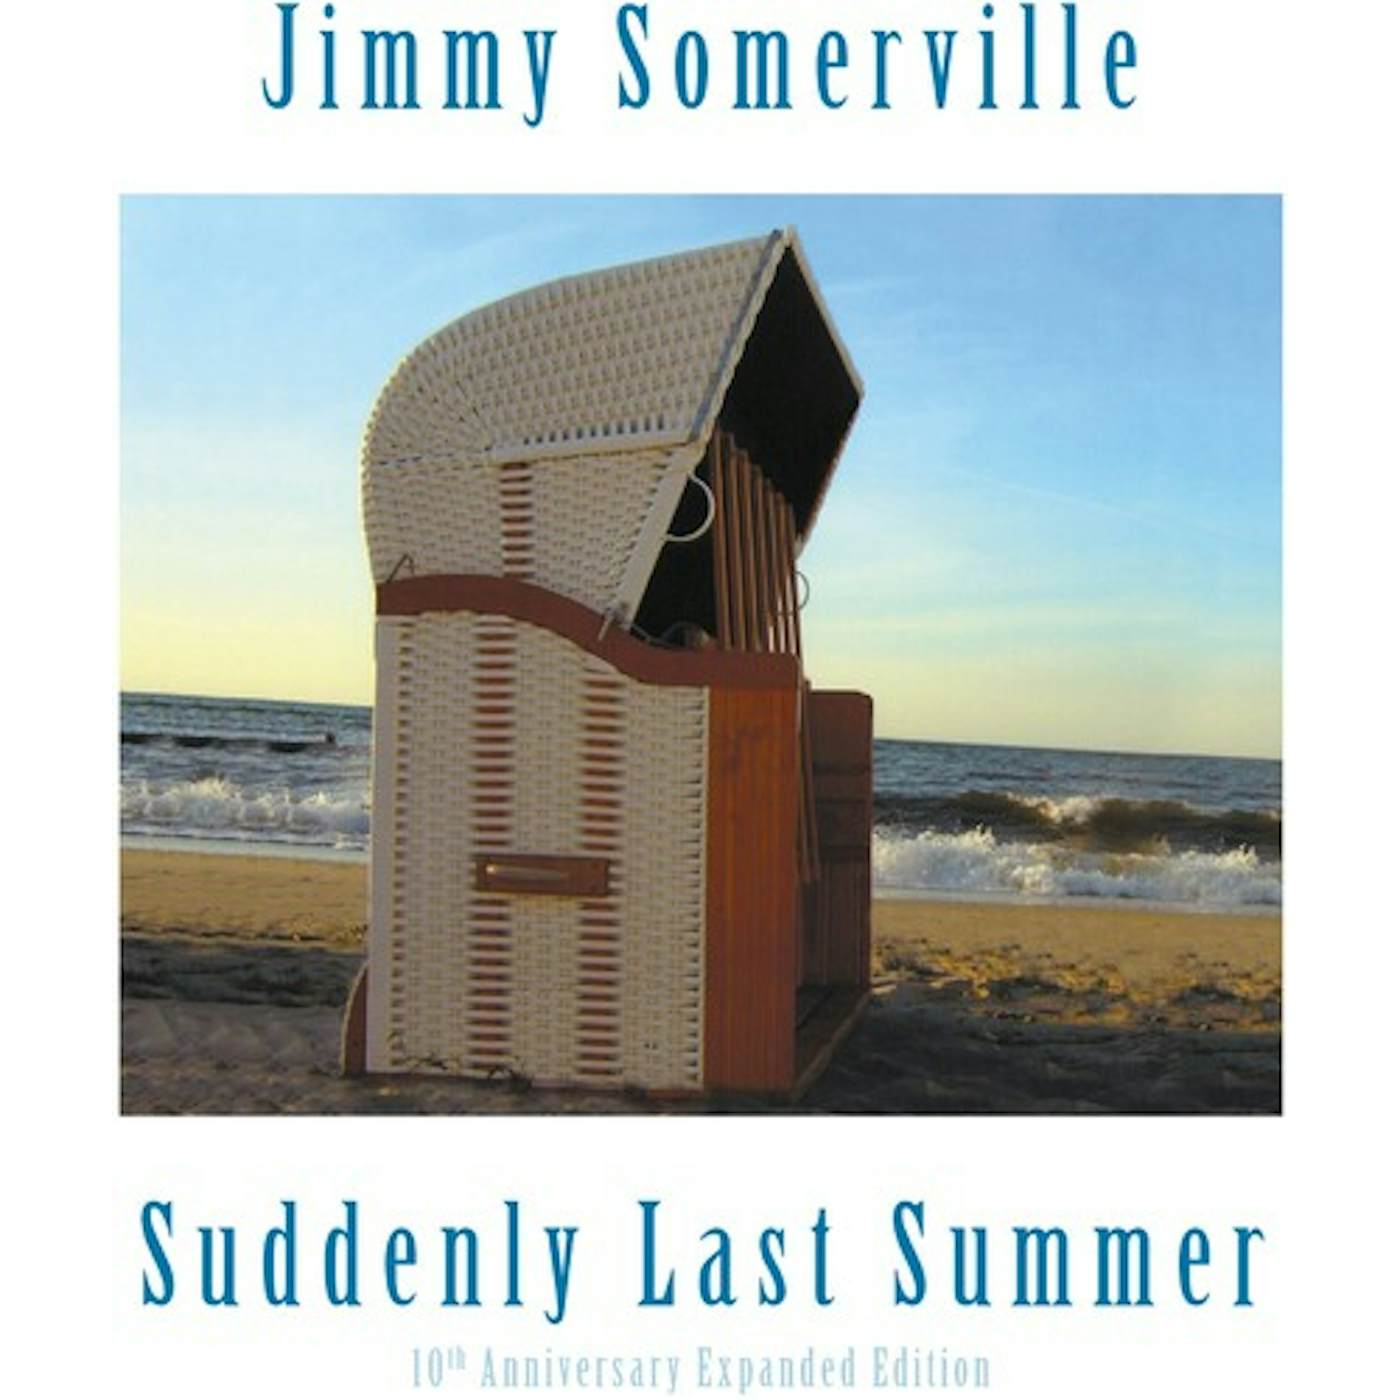 Jimmy Somerville SUDDENLY LAST SUMMER: 10TH ANNIVERSARY CD